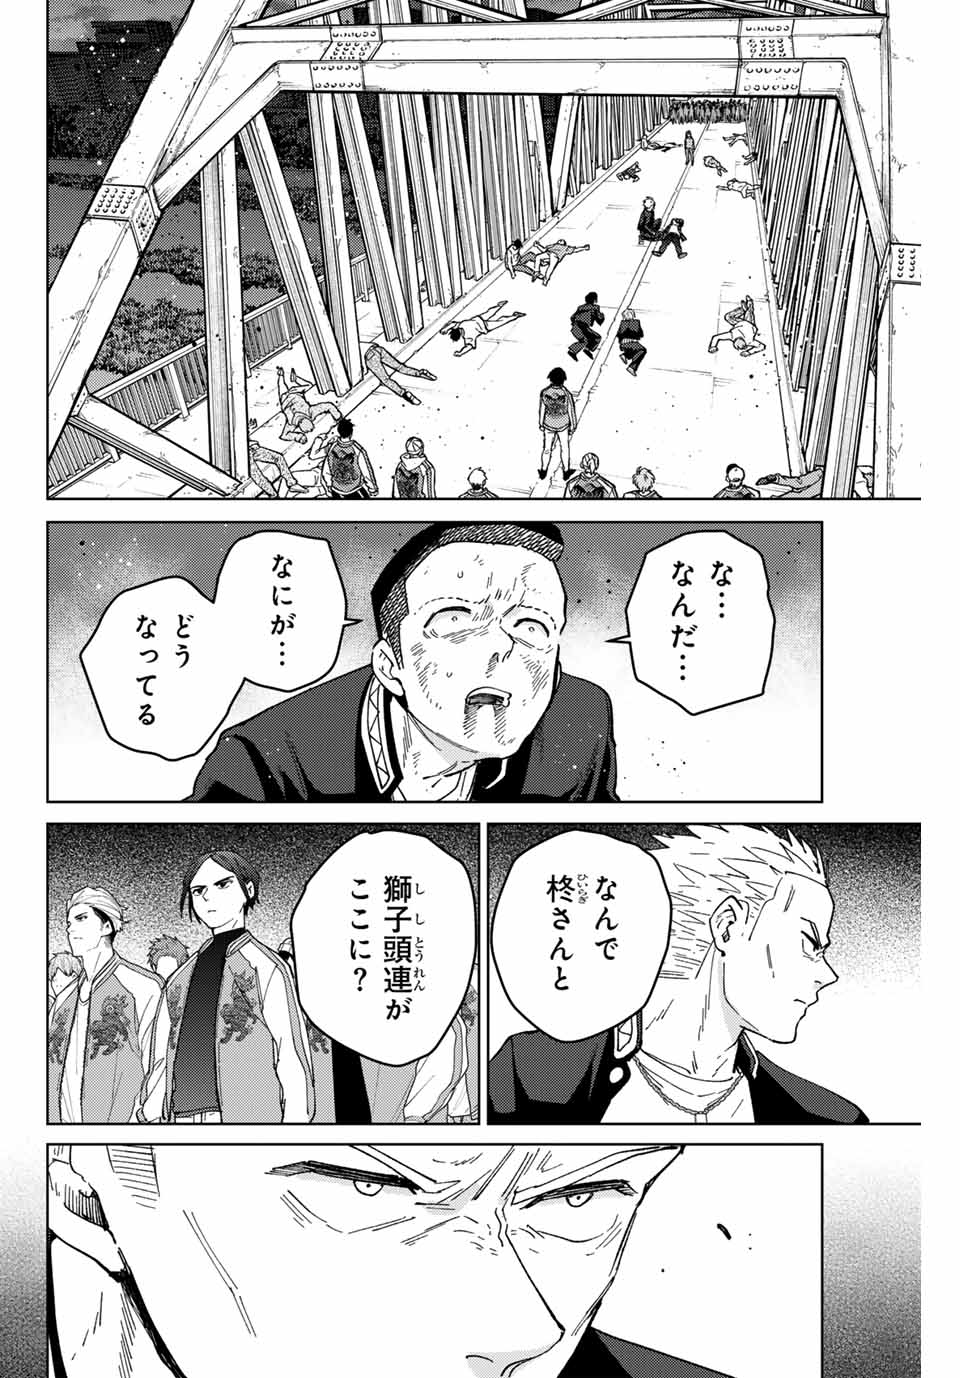 Wind Breaker (NII Satoru) - Chapter 126 - Page 2